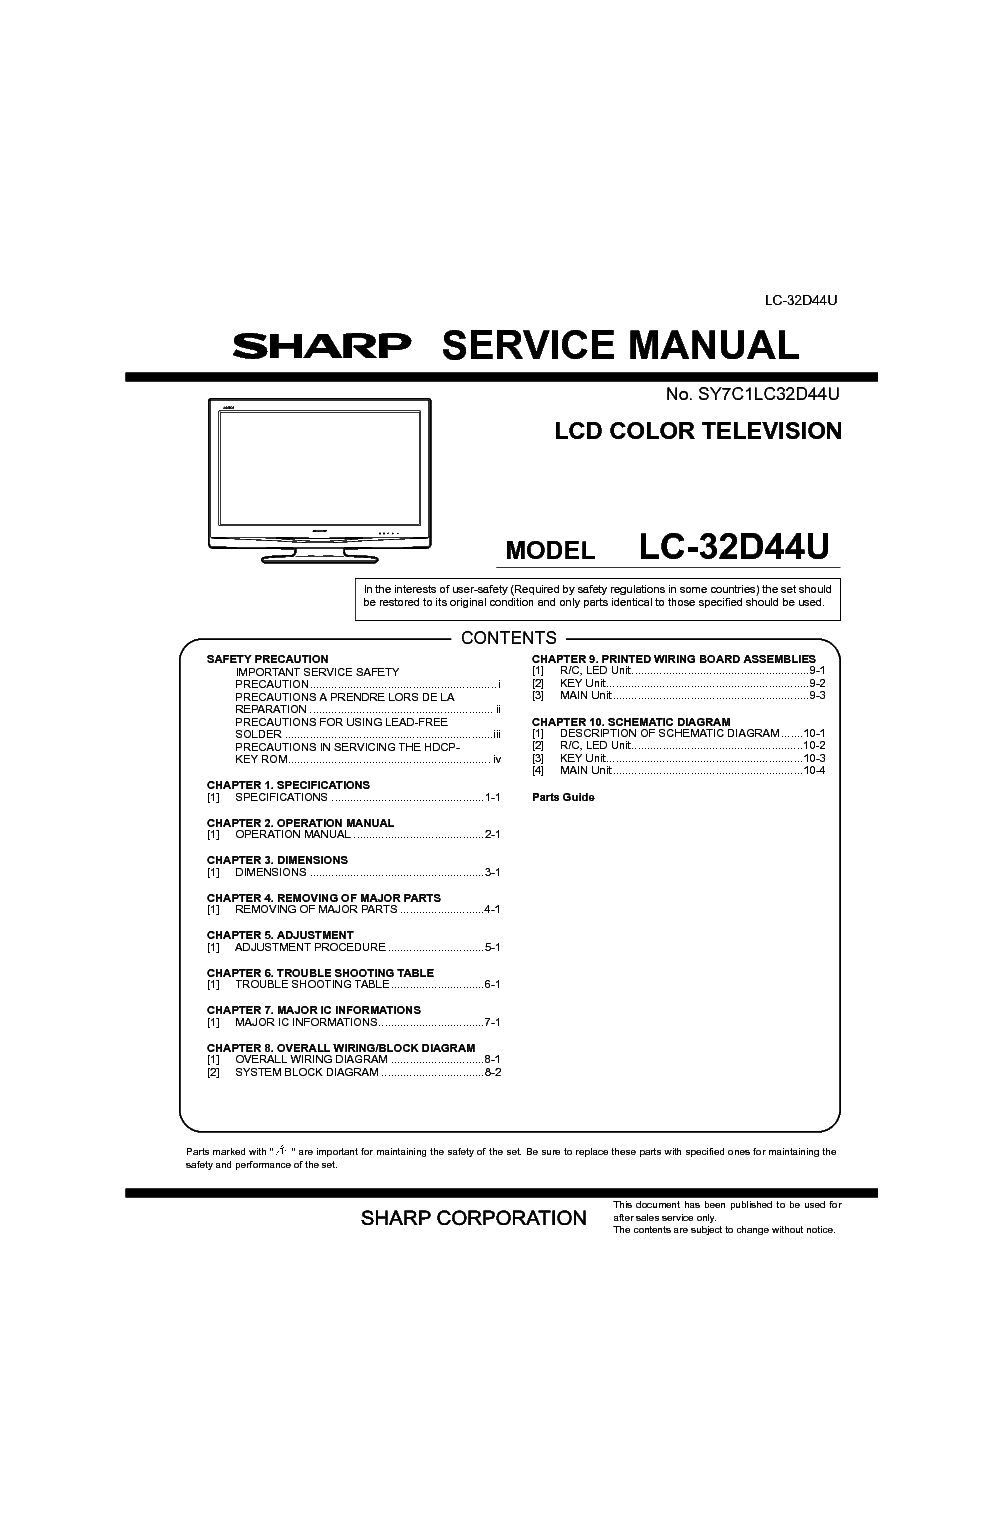 SHARP LC-32D44U SM service manual (1st page)